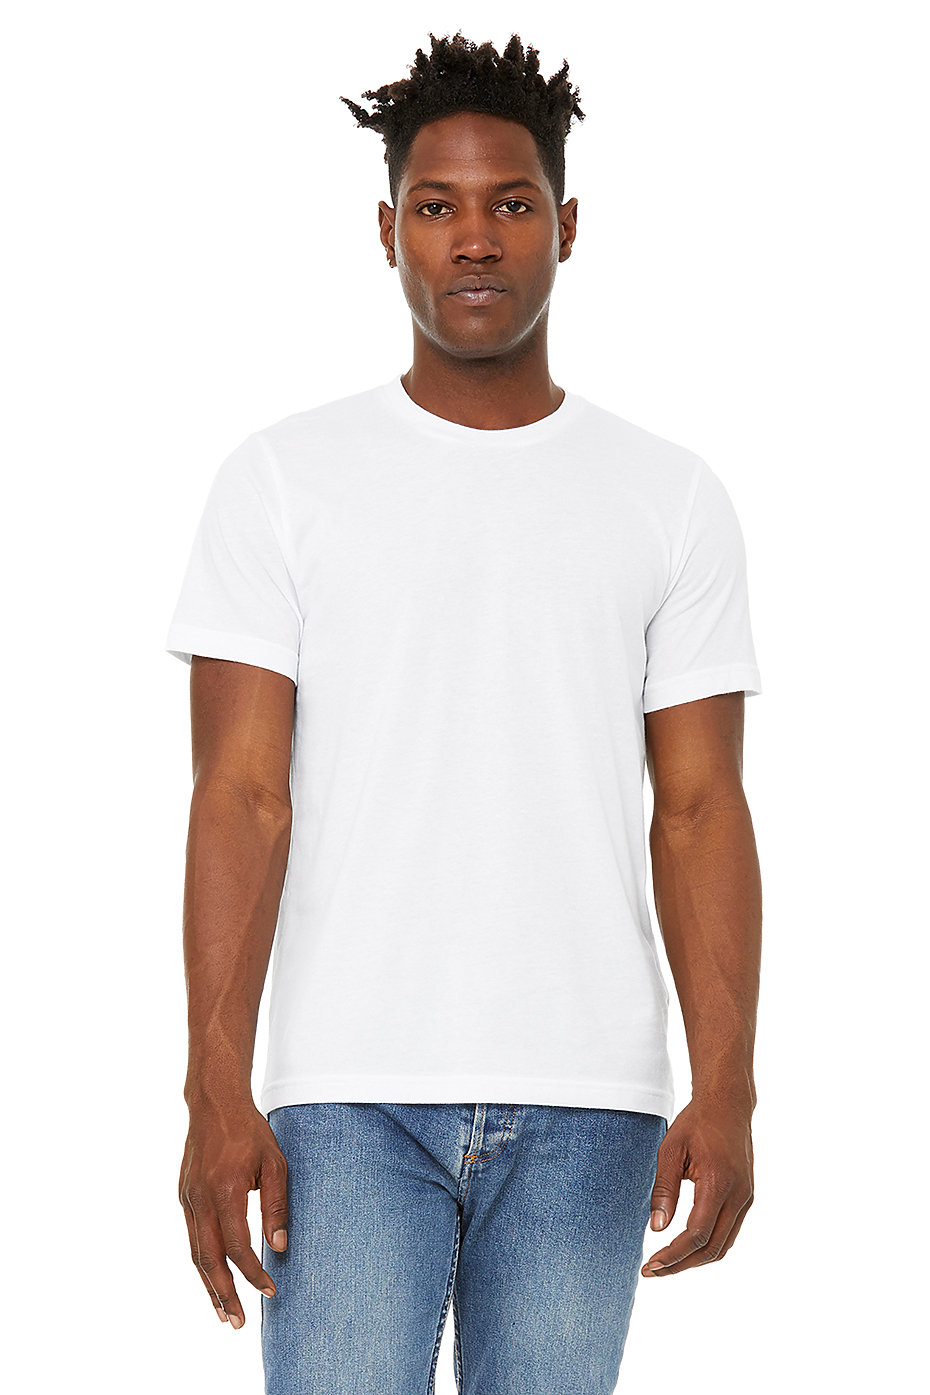 Download Unisex Sueded Tee Wholesale Blank T Shirts Bulk Plain T Shirts Bella Canvas